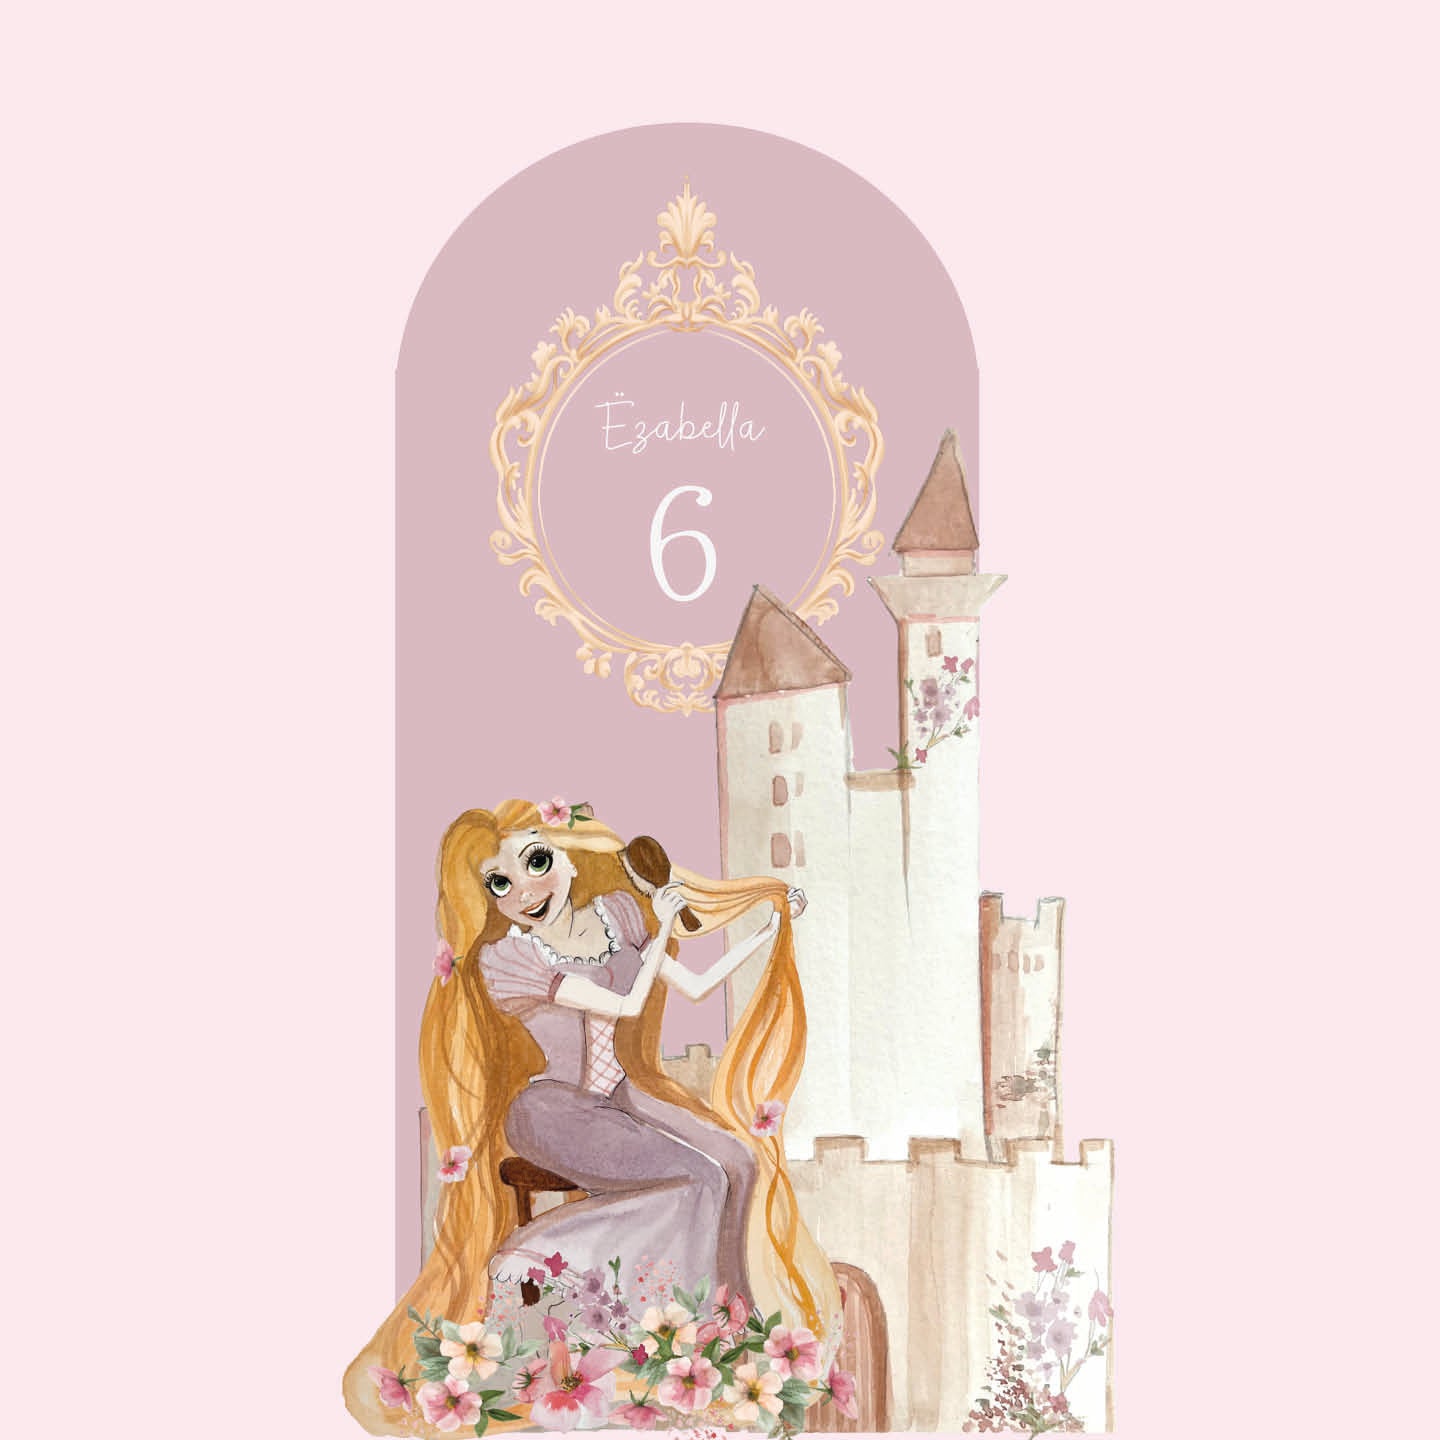 Disney Rapunzel PRINCESS PARTY da terra | Fondale per festa compleanno - Peekaboo